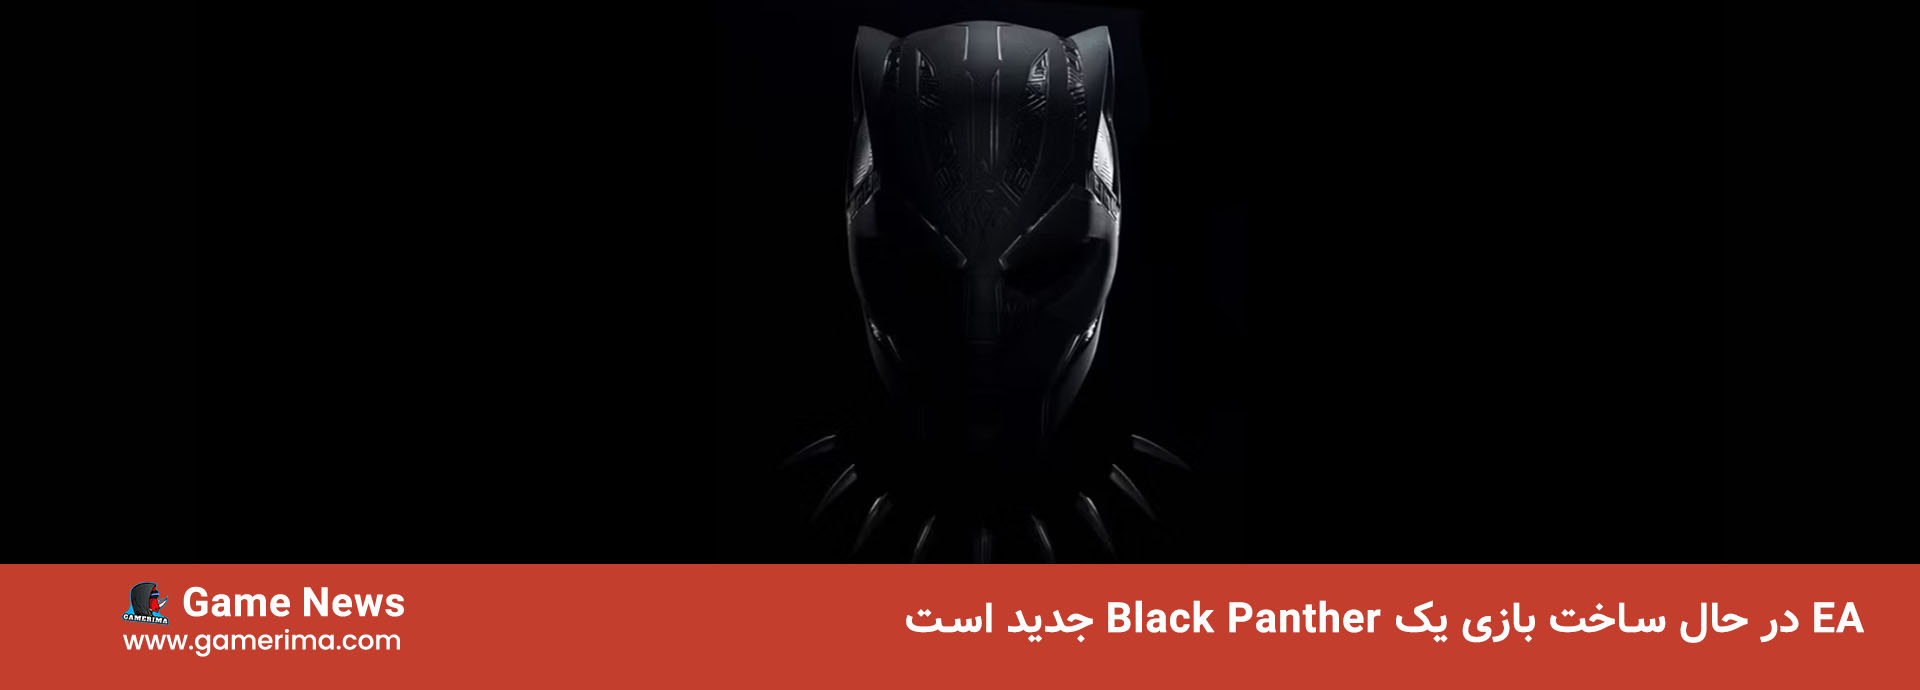 EA در حال ساخت بازی یک Black Panther جدید است